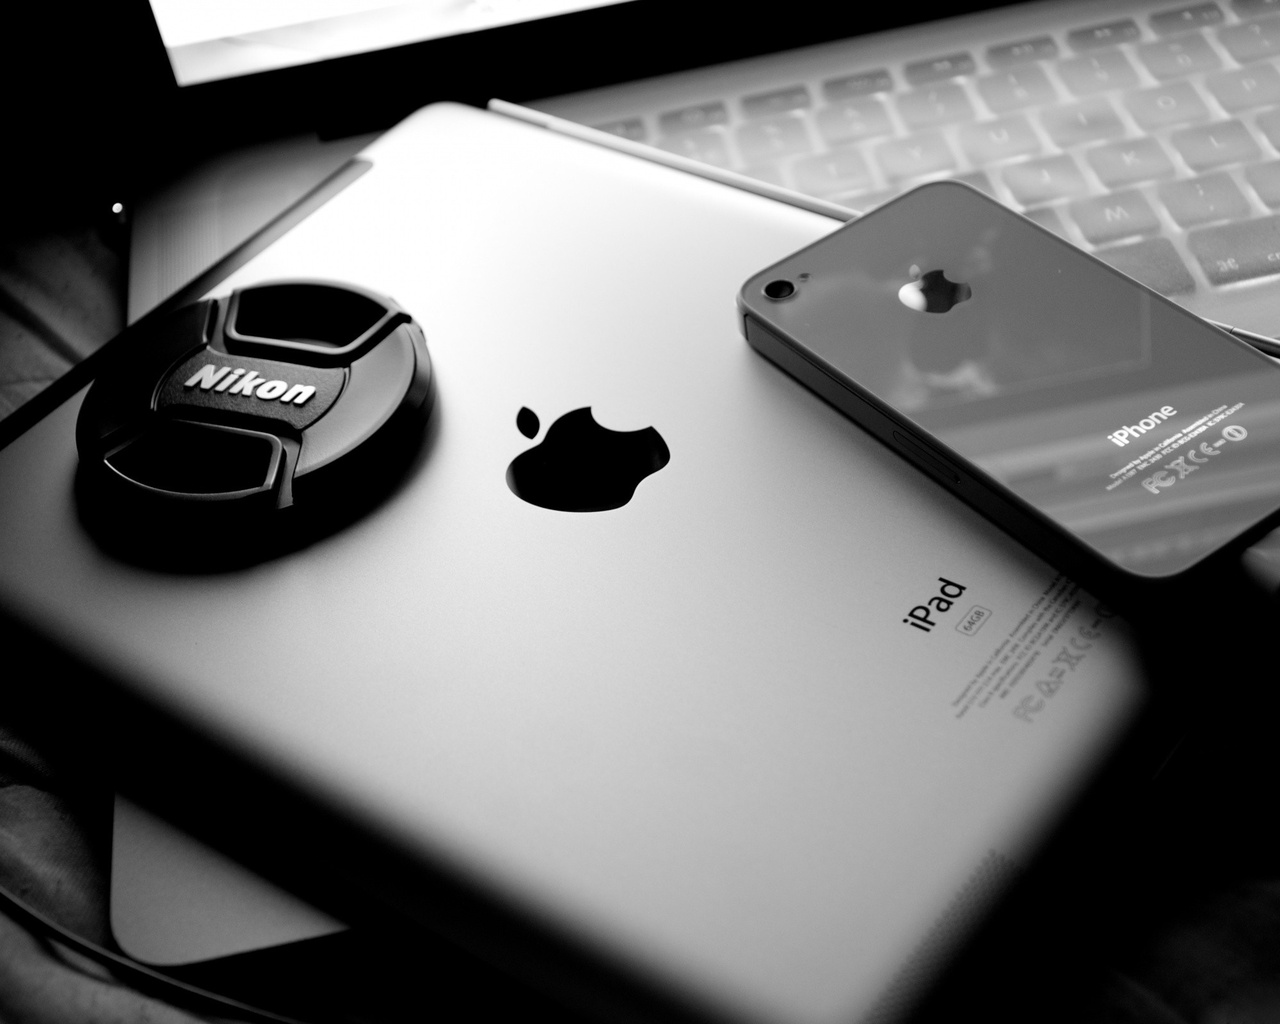 ipad 2, iphone 4, nikon, macbook pro, apple, iphone 4s